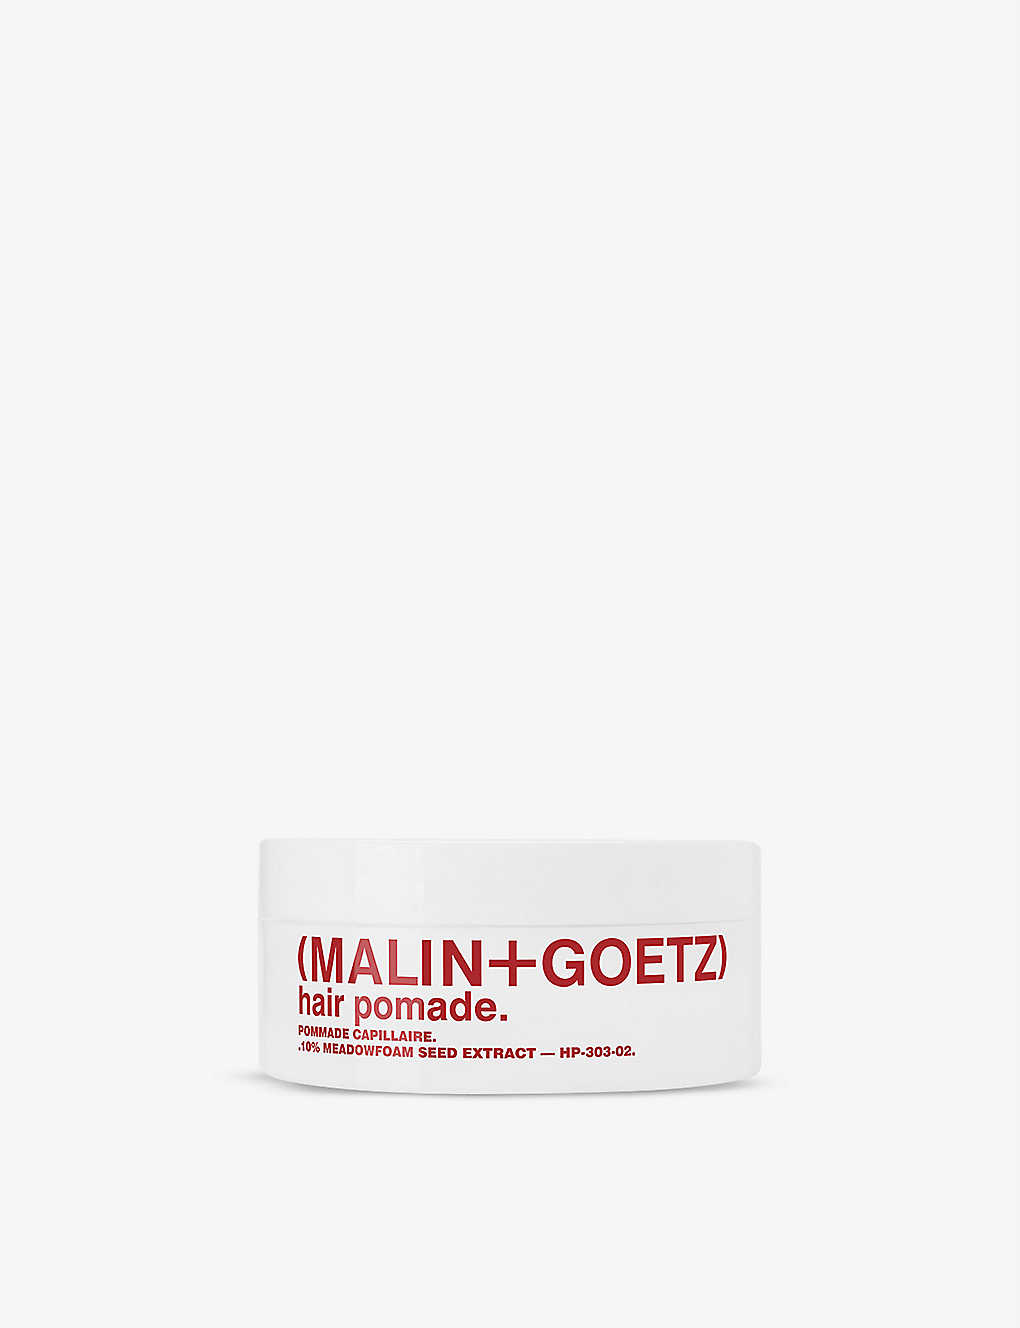 MALIN + GOETZ MALIN + GOETZ HAIR POMADE 57G,45090417